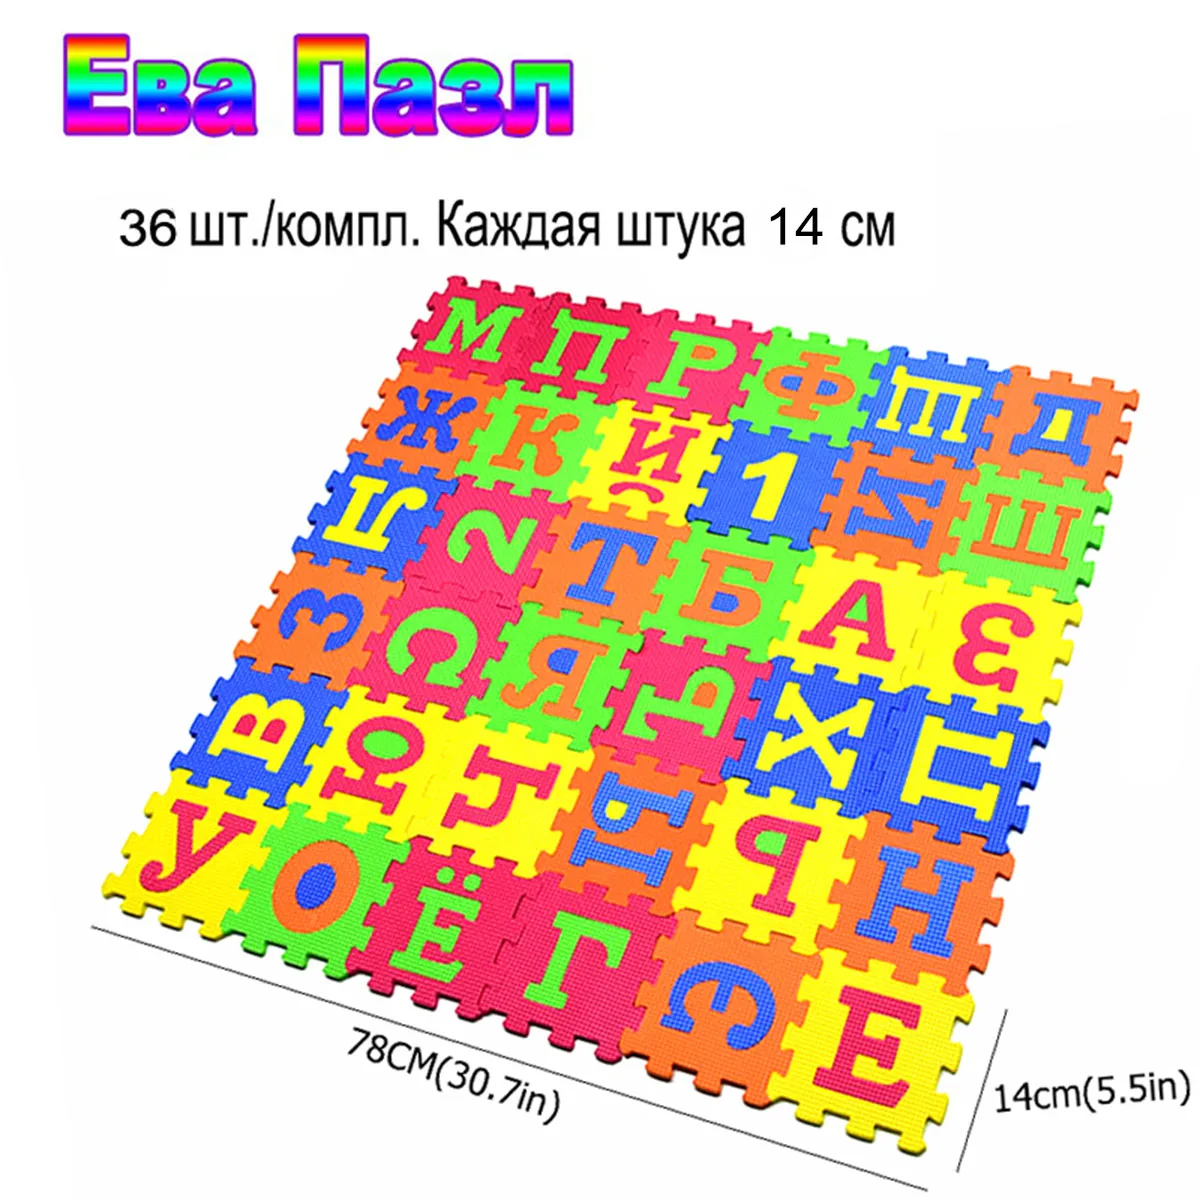 

Russian Alphabet Mat Kids Play Cartoon EVA Learning Puzzle Toy Foam Interlocking Patchwork Floor Carpets 36 Pcs 14*14cm Big Size